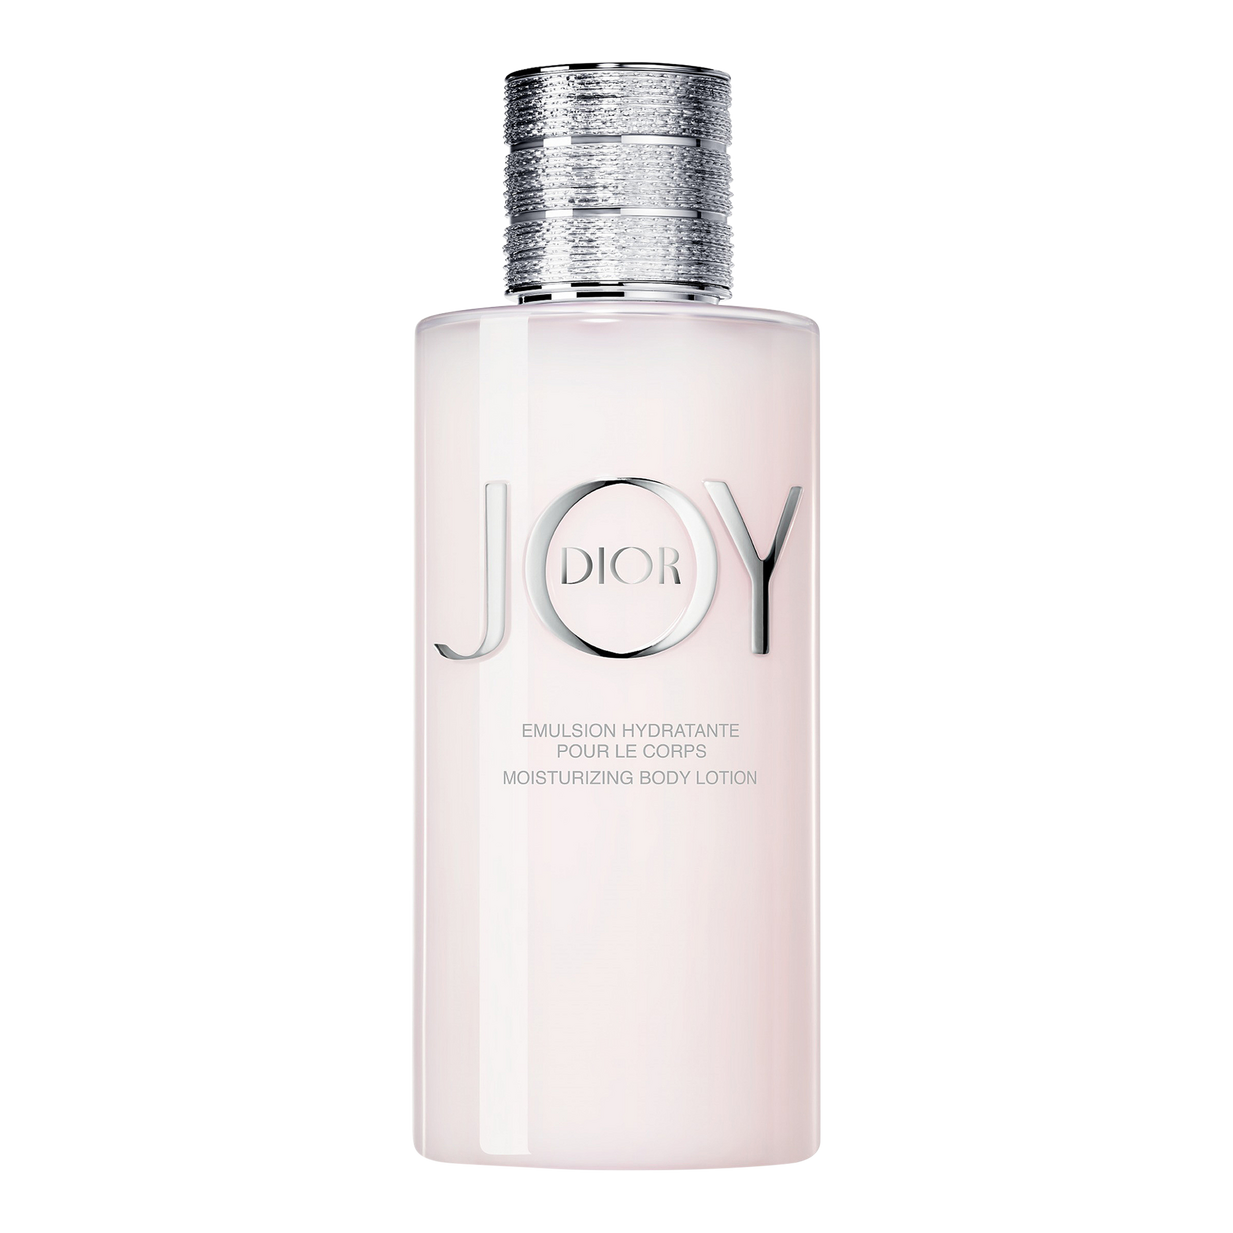 JOY By Dior Moisturizing Body Lotion - Dior | Ulta Beauty